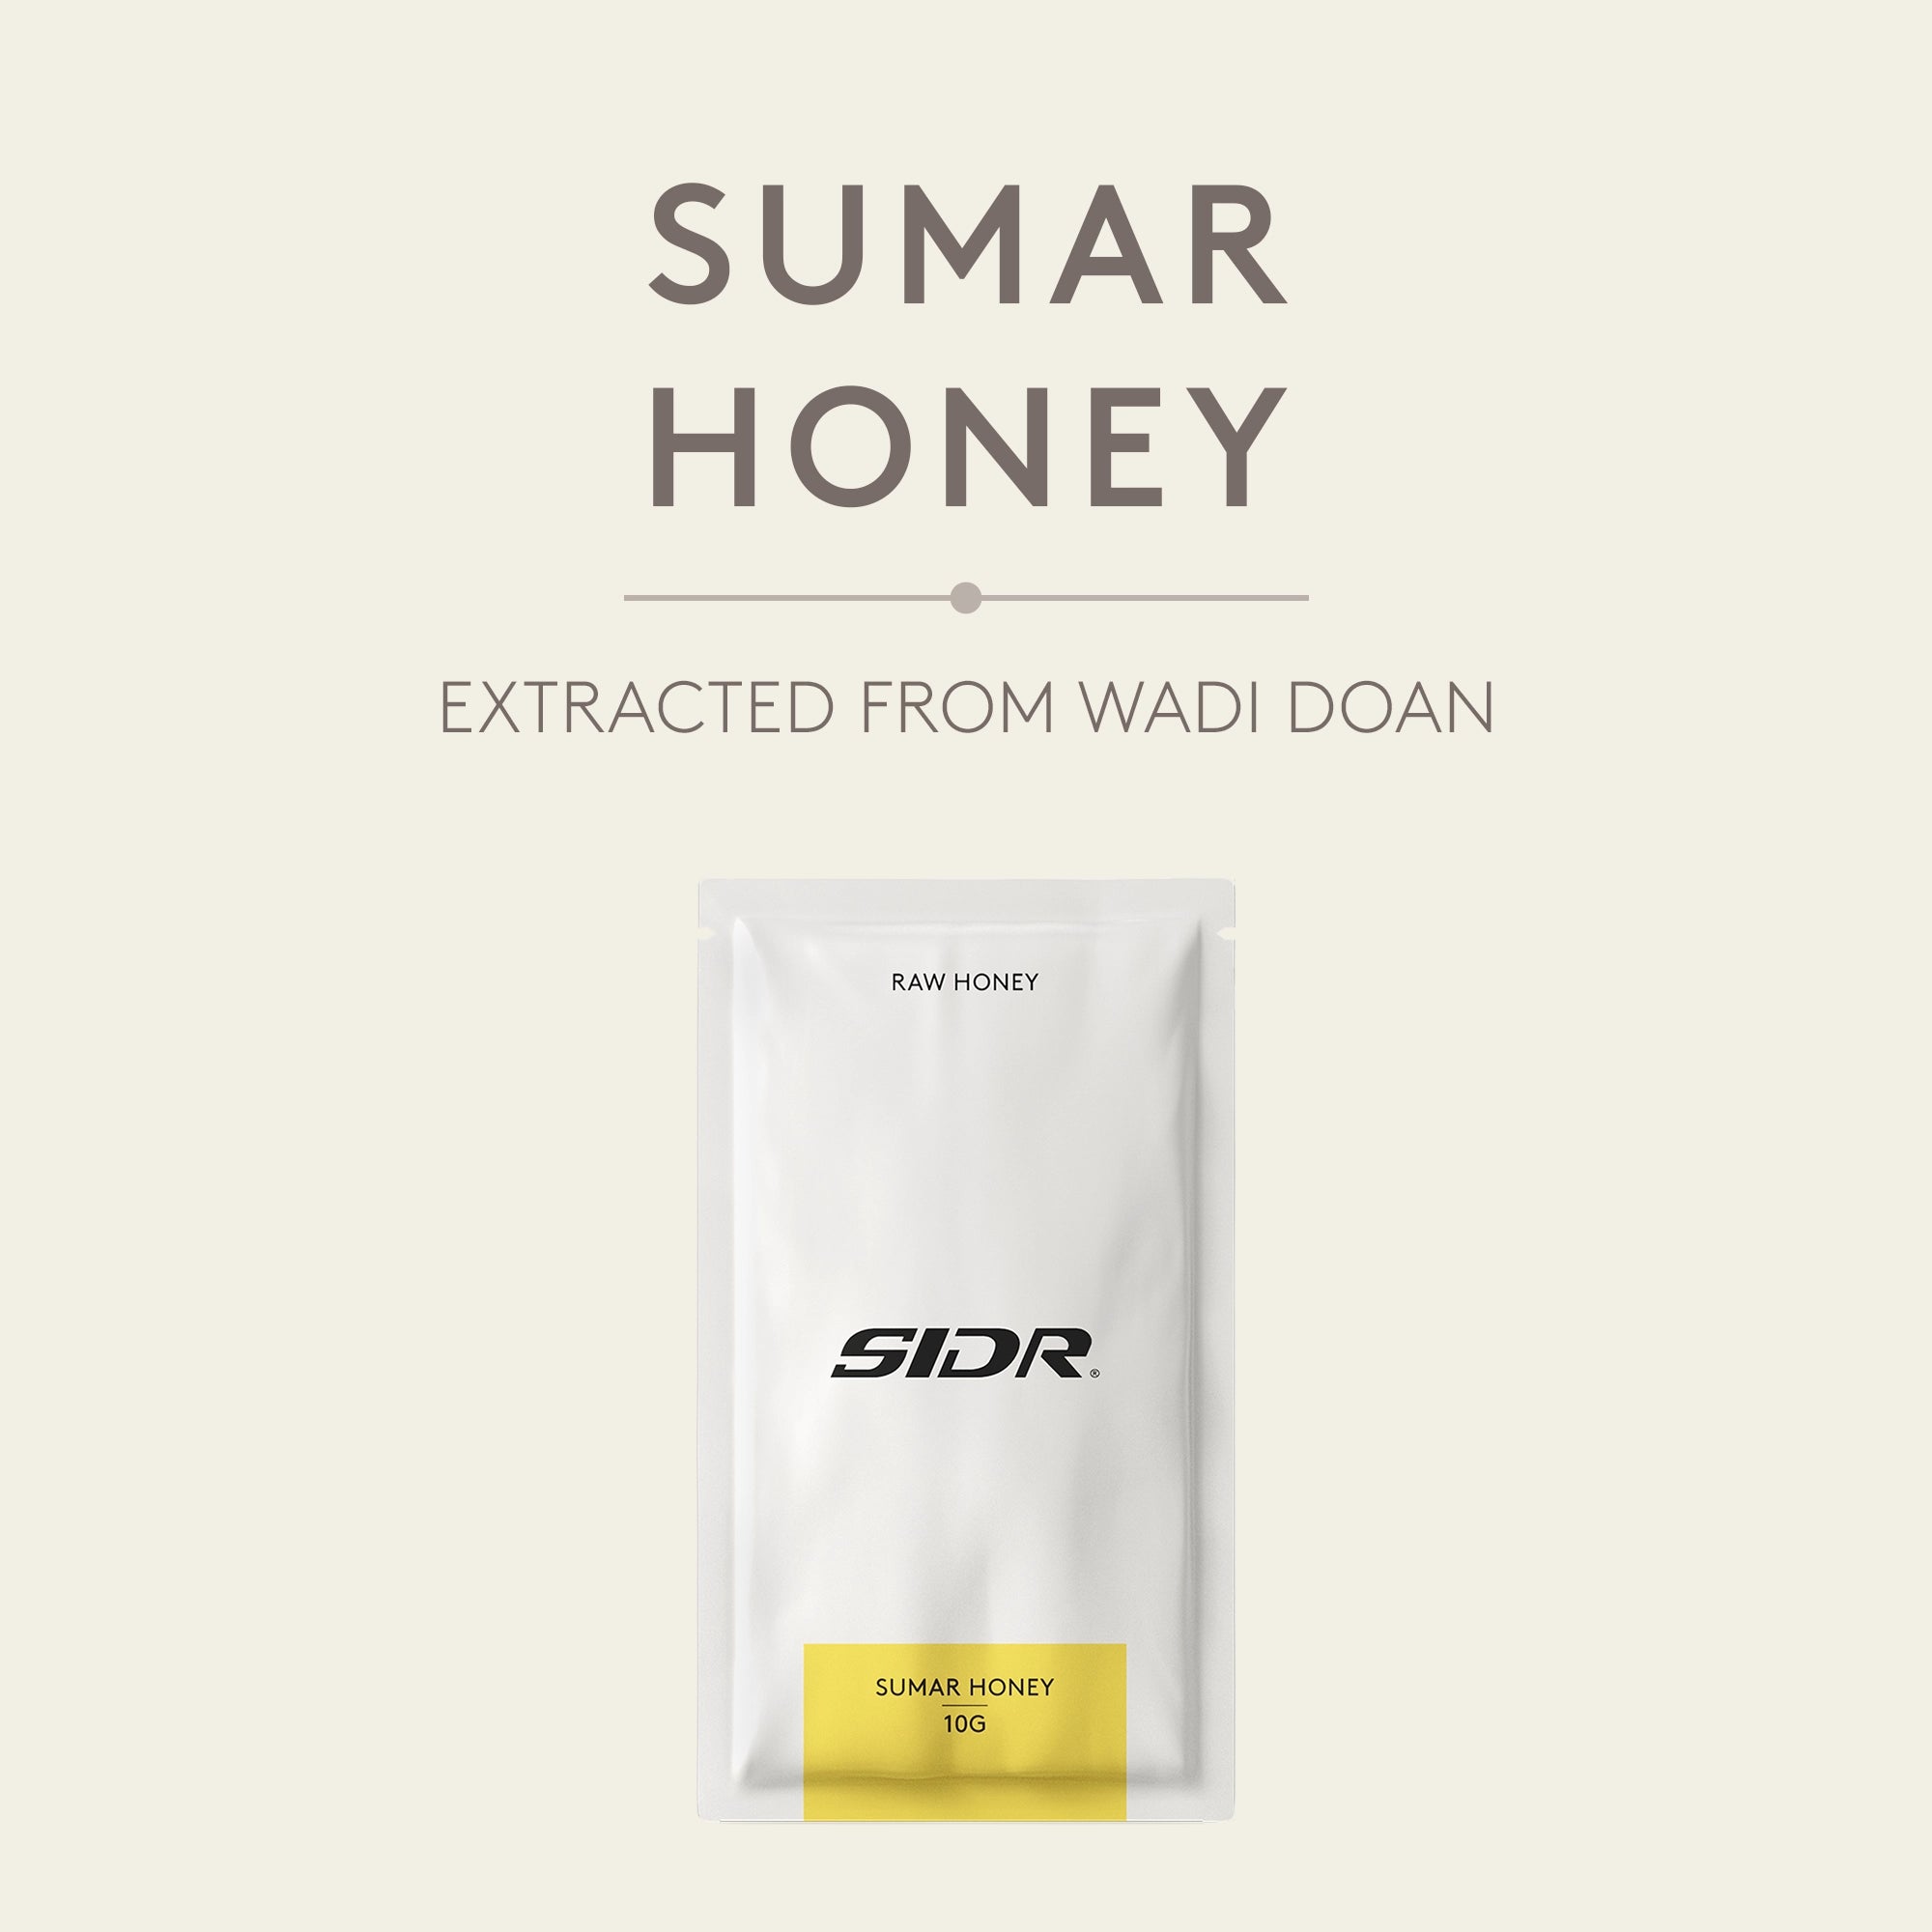 sumar honey packet from wadi doan